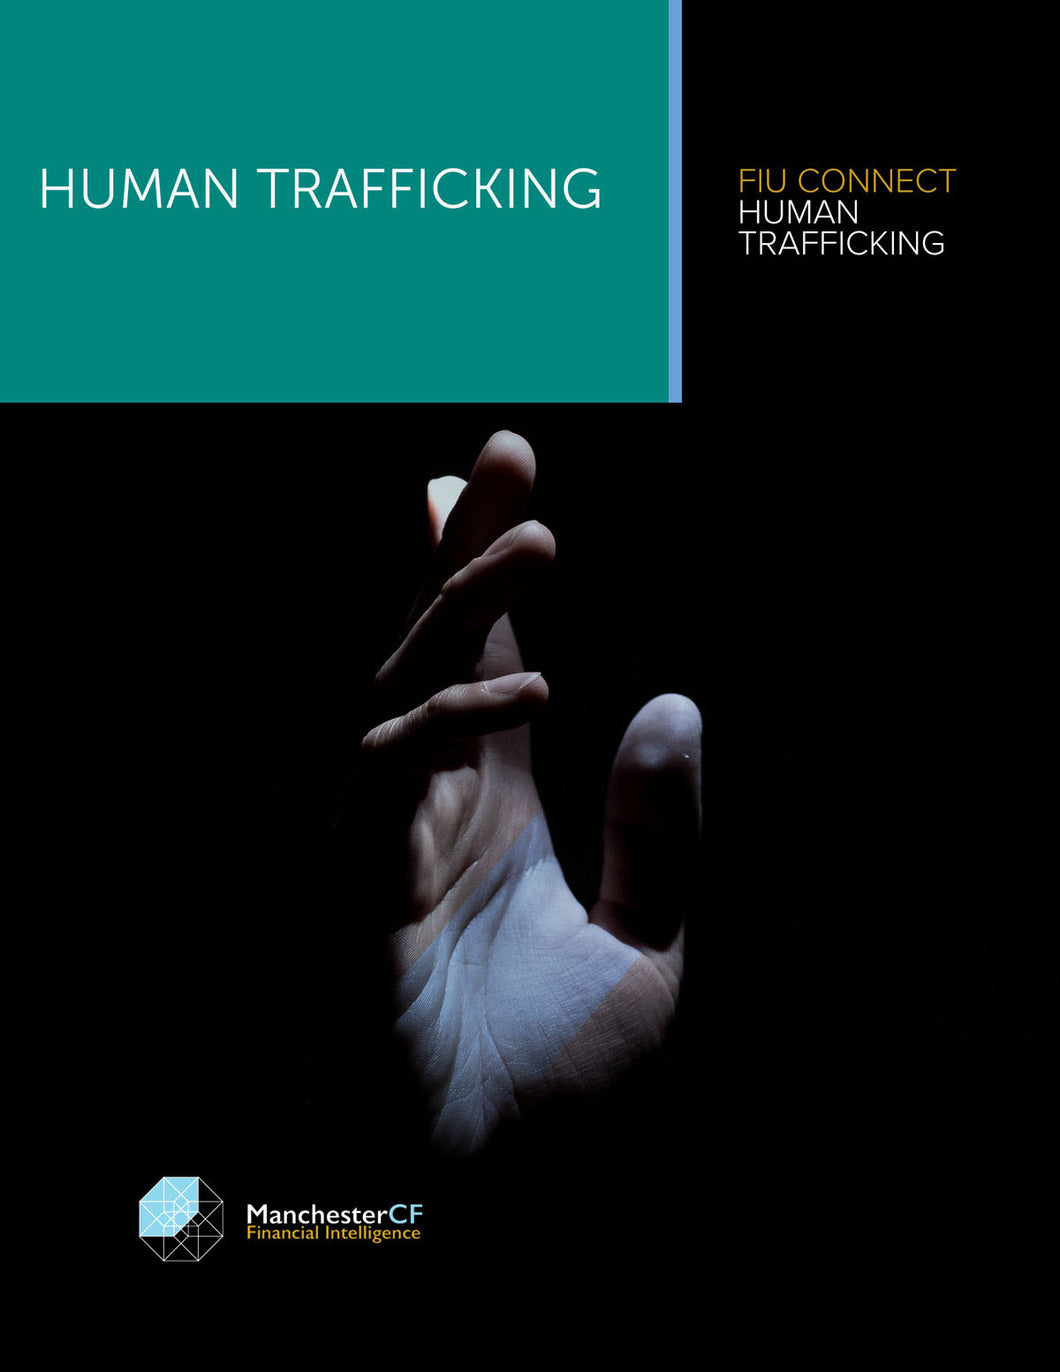 FIU Connect (Human Trafficking)